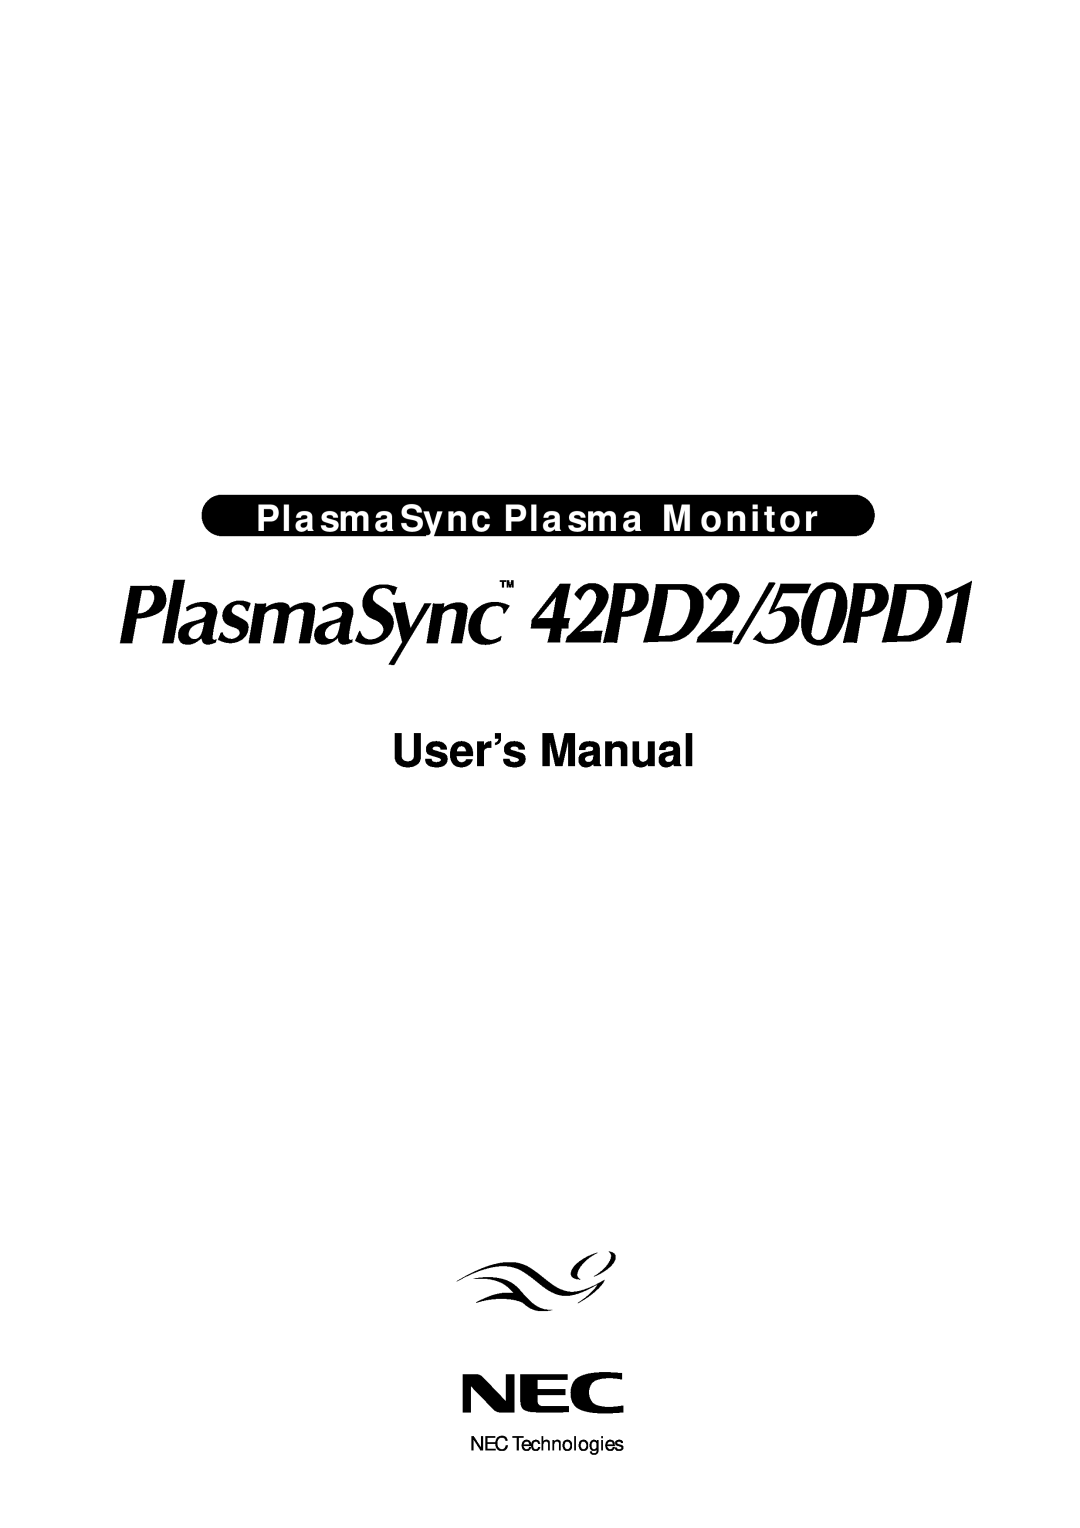 NEC 42PD2, 50PD1, 50PD1, 42PD2 user manual User’s Manual, PlasmaSync Plasma Monitor, NEC Technologies 